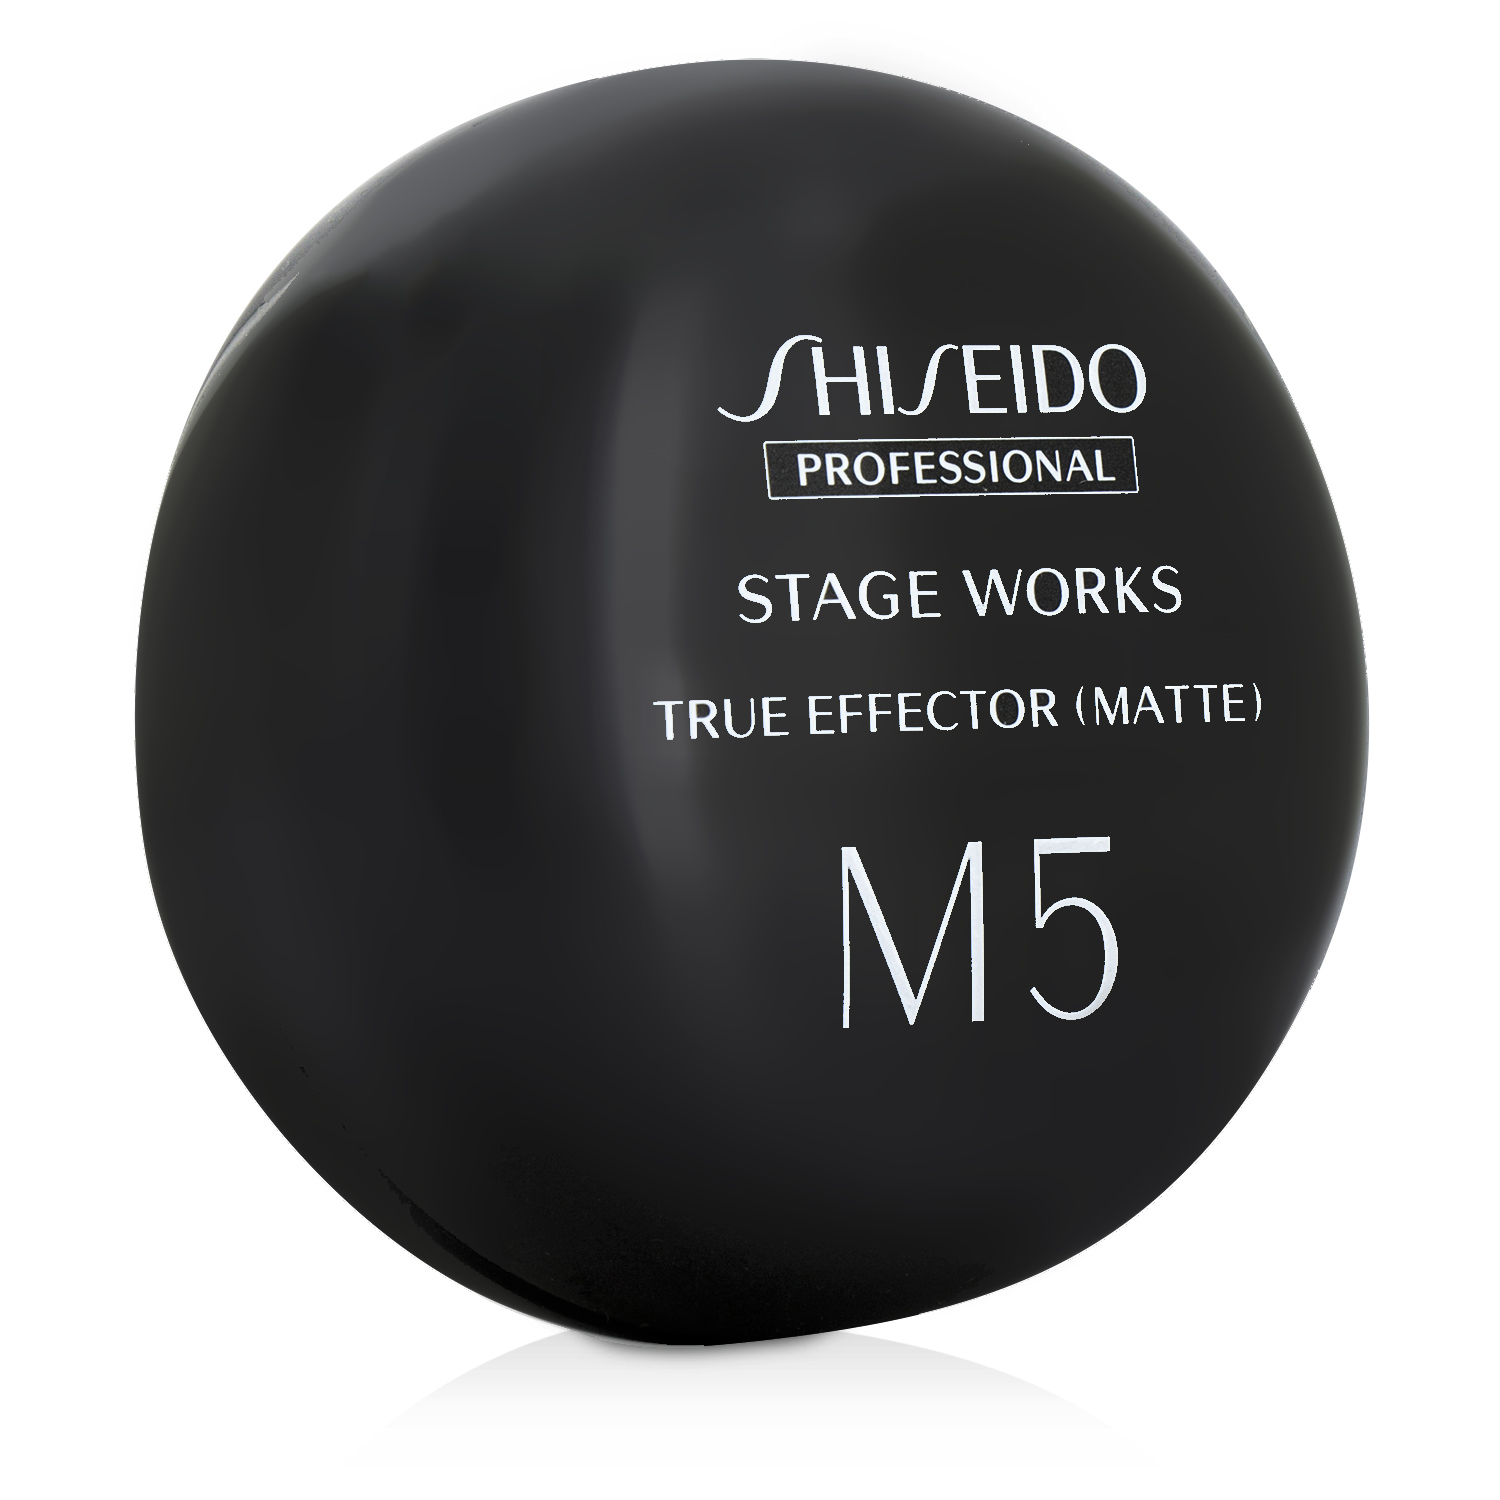 Stage Works True Effector - # M5 (Matte) Shiseido Image